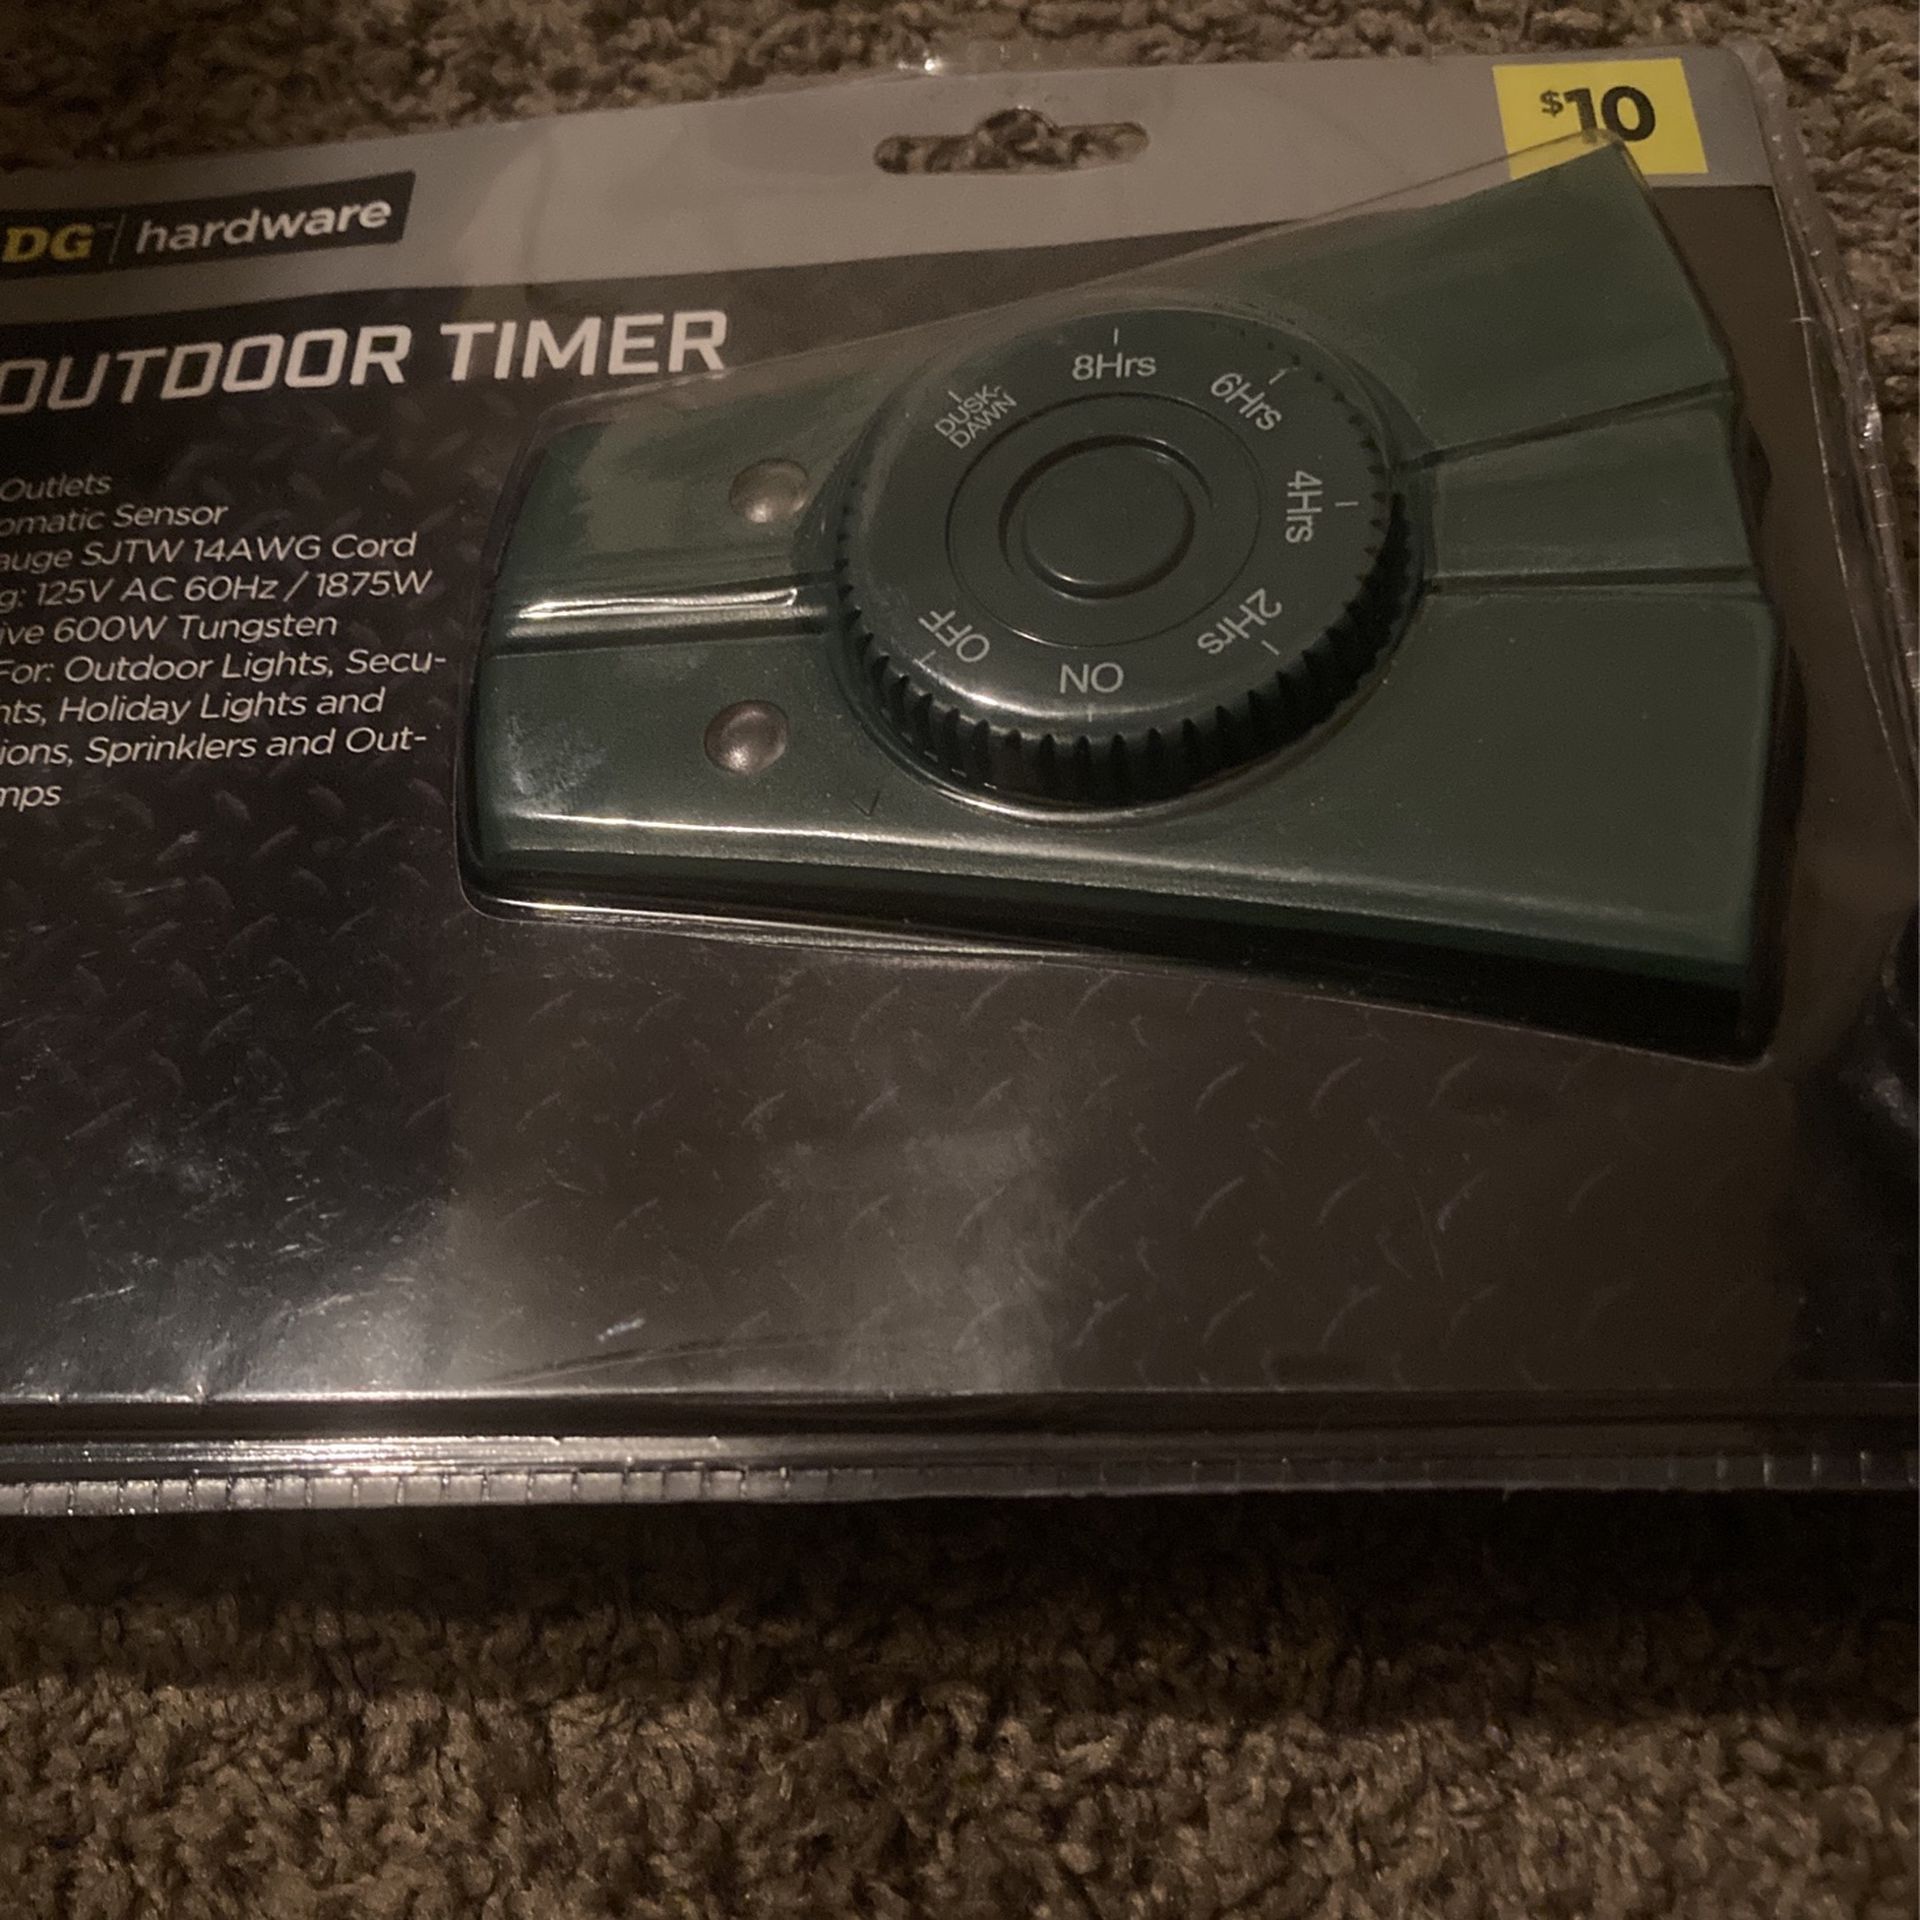 Brand New In Box Outdoor Timer Originally $10